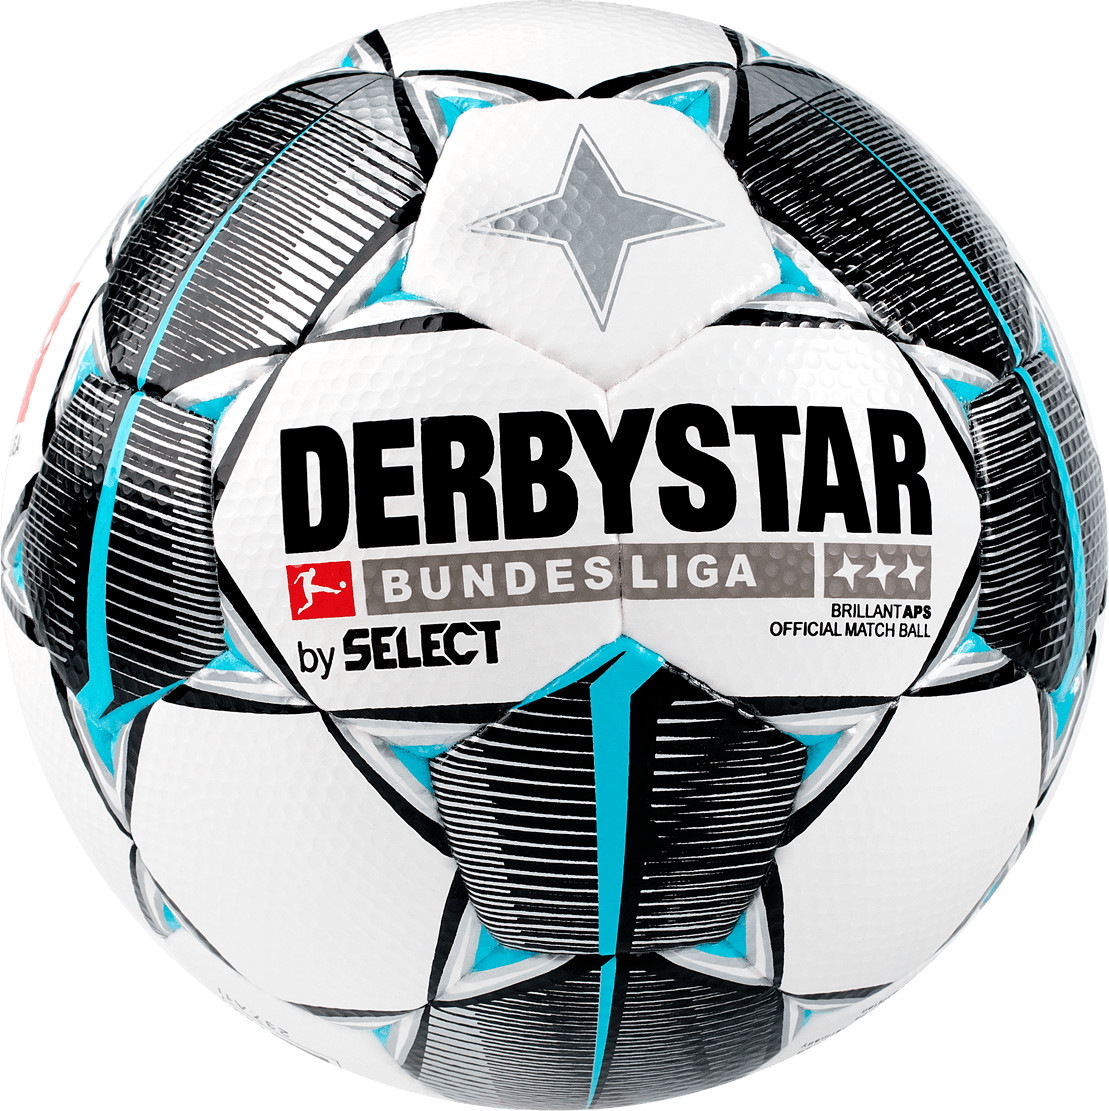 Derbystar Brillant APS OMB 2019/20 (1802500019) ab 139,95 € |  Preisvergleich bei